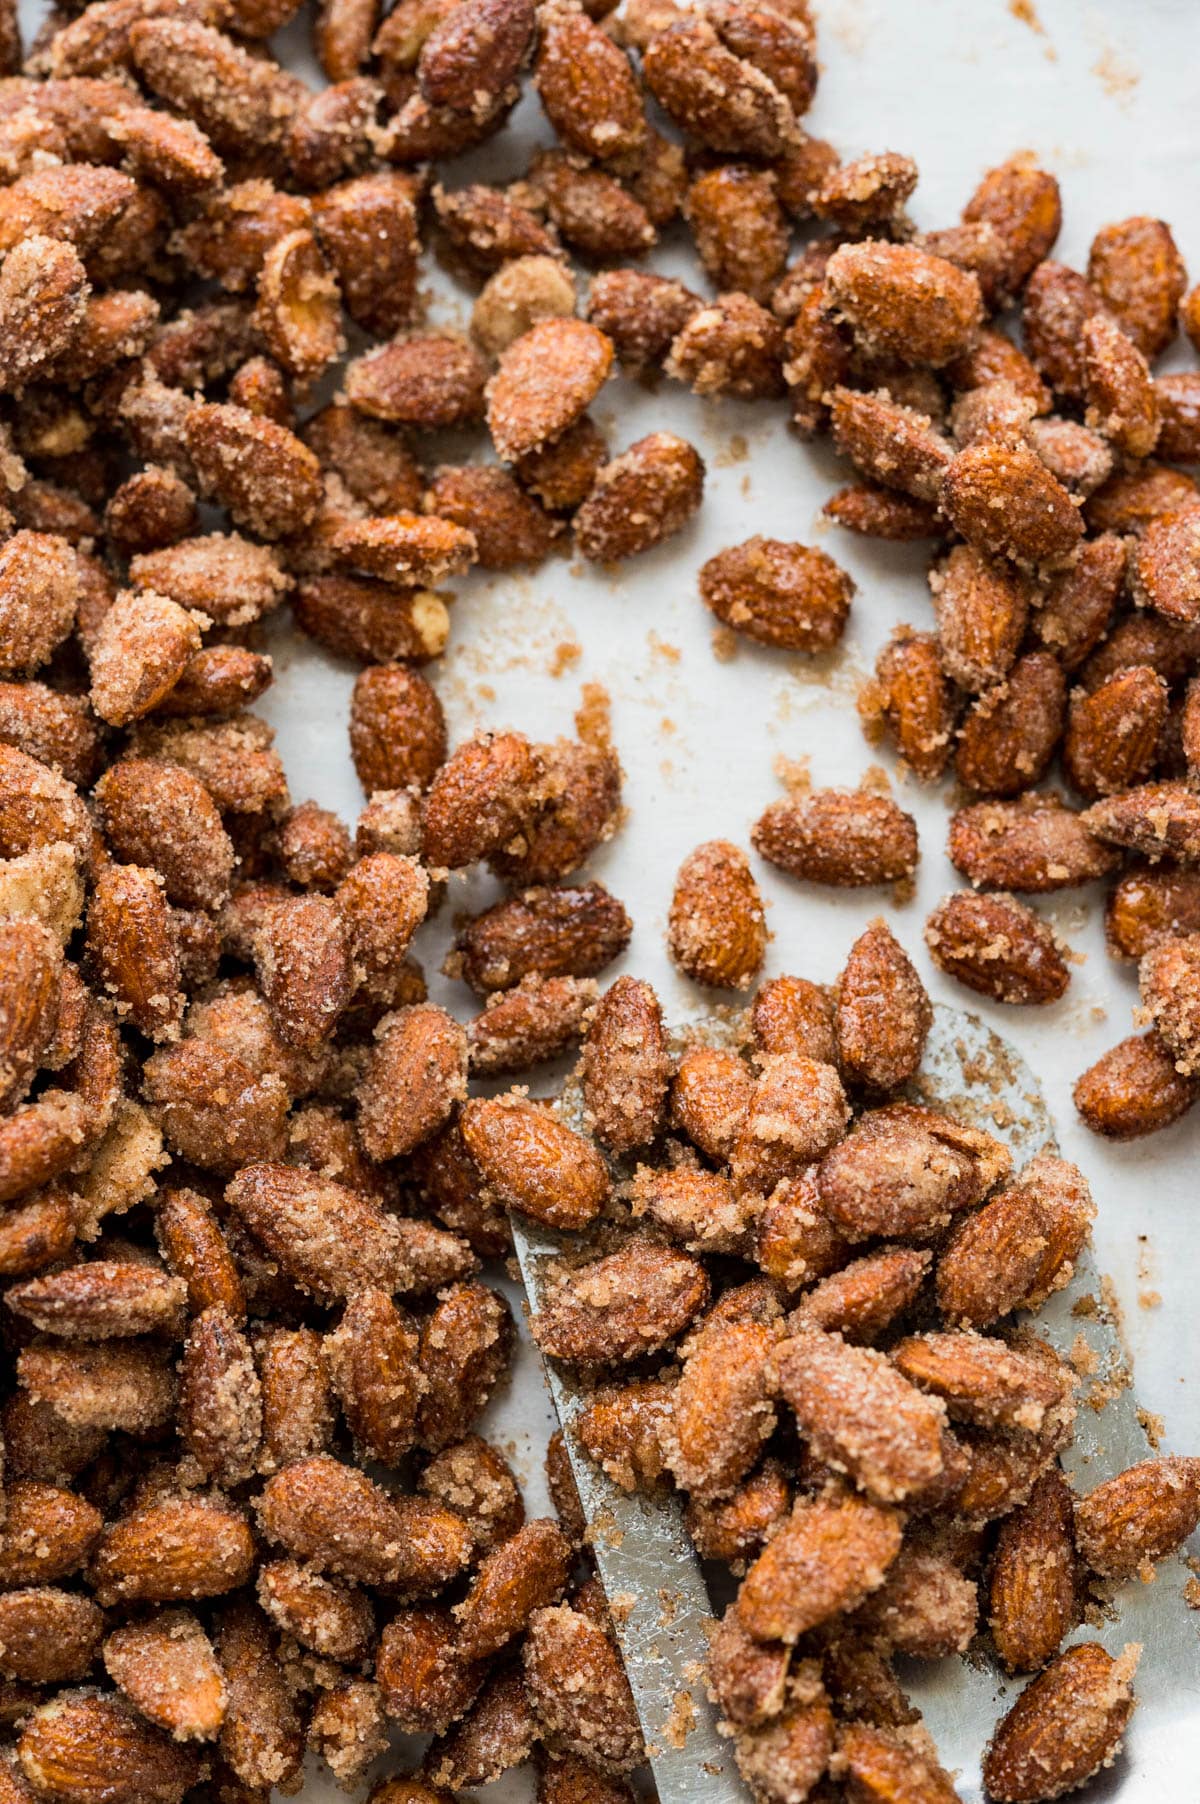 Flip the nuts halfway through roasting them.